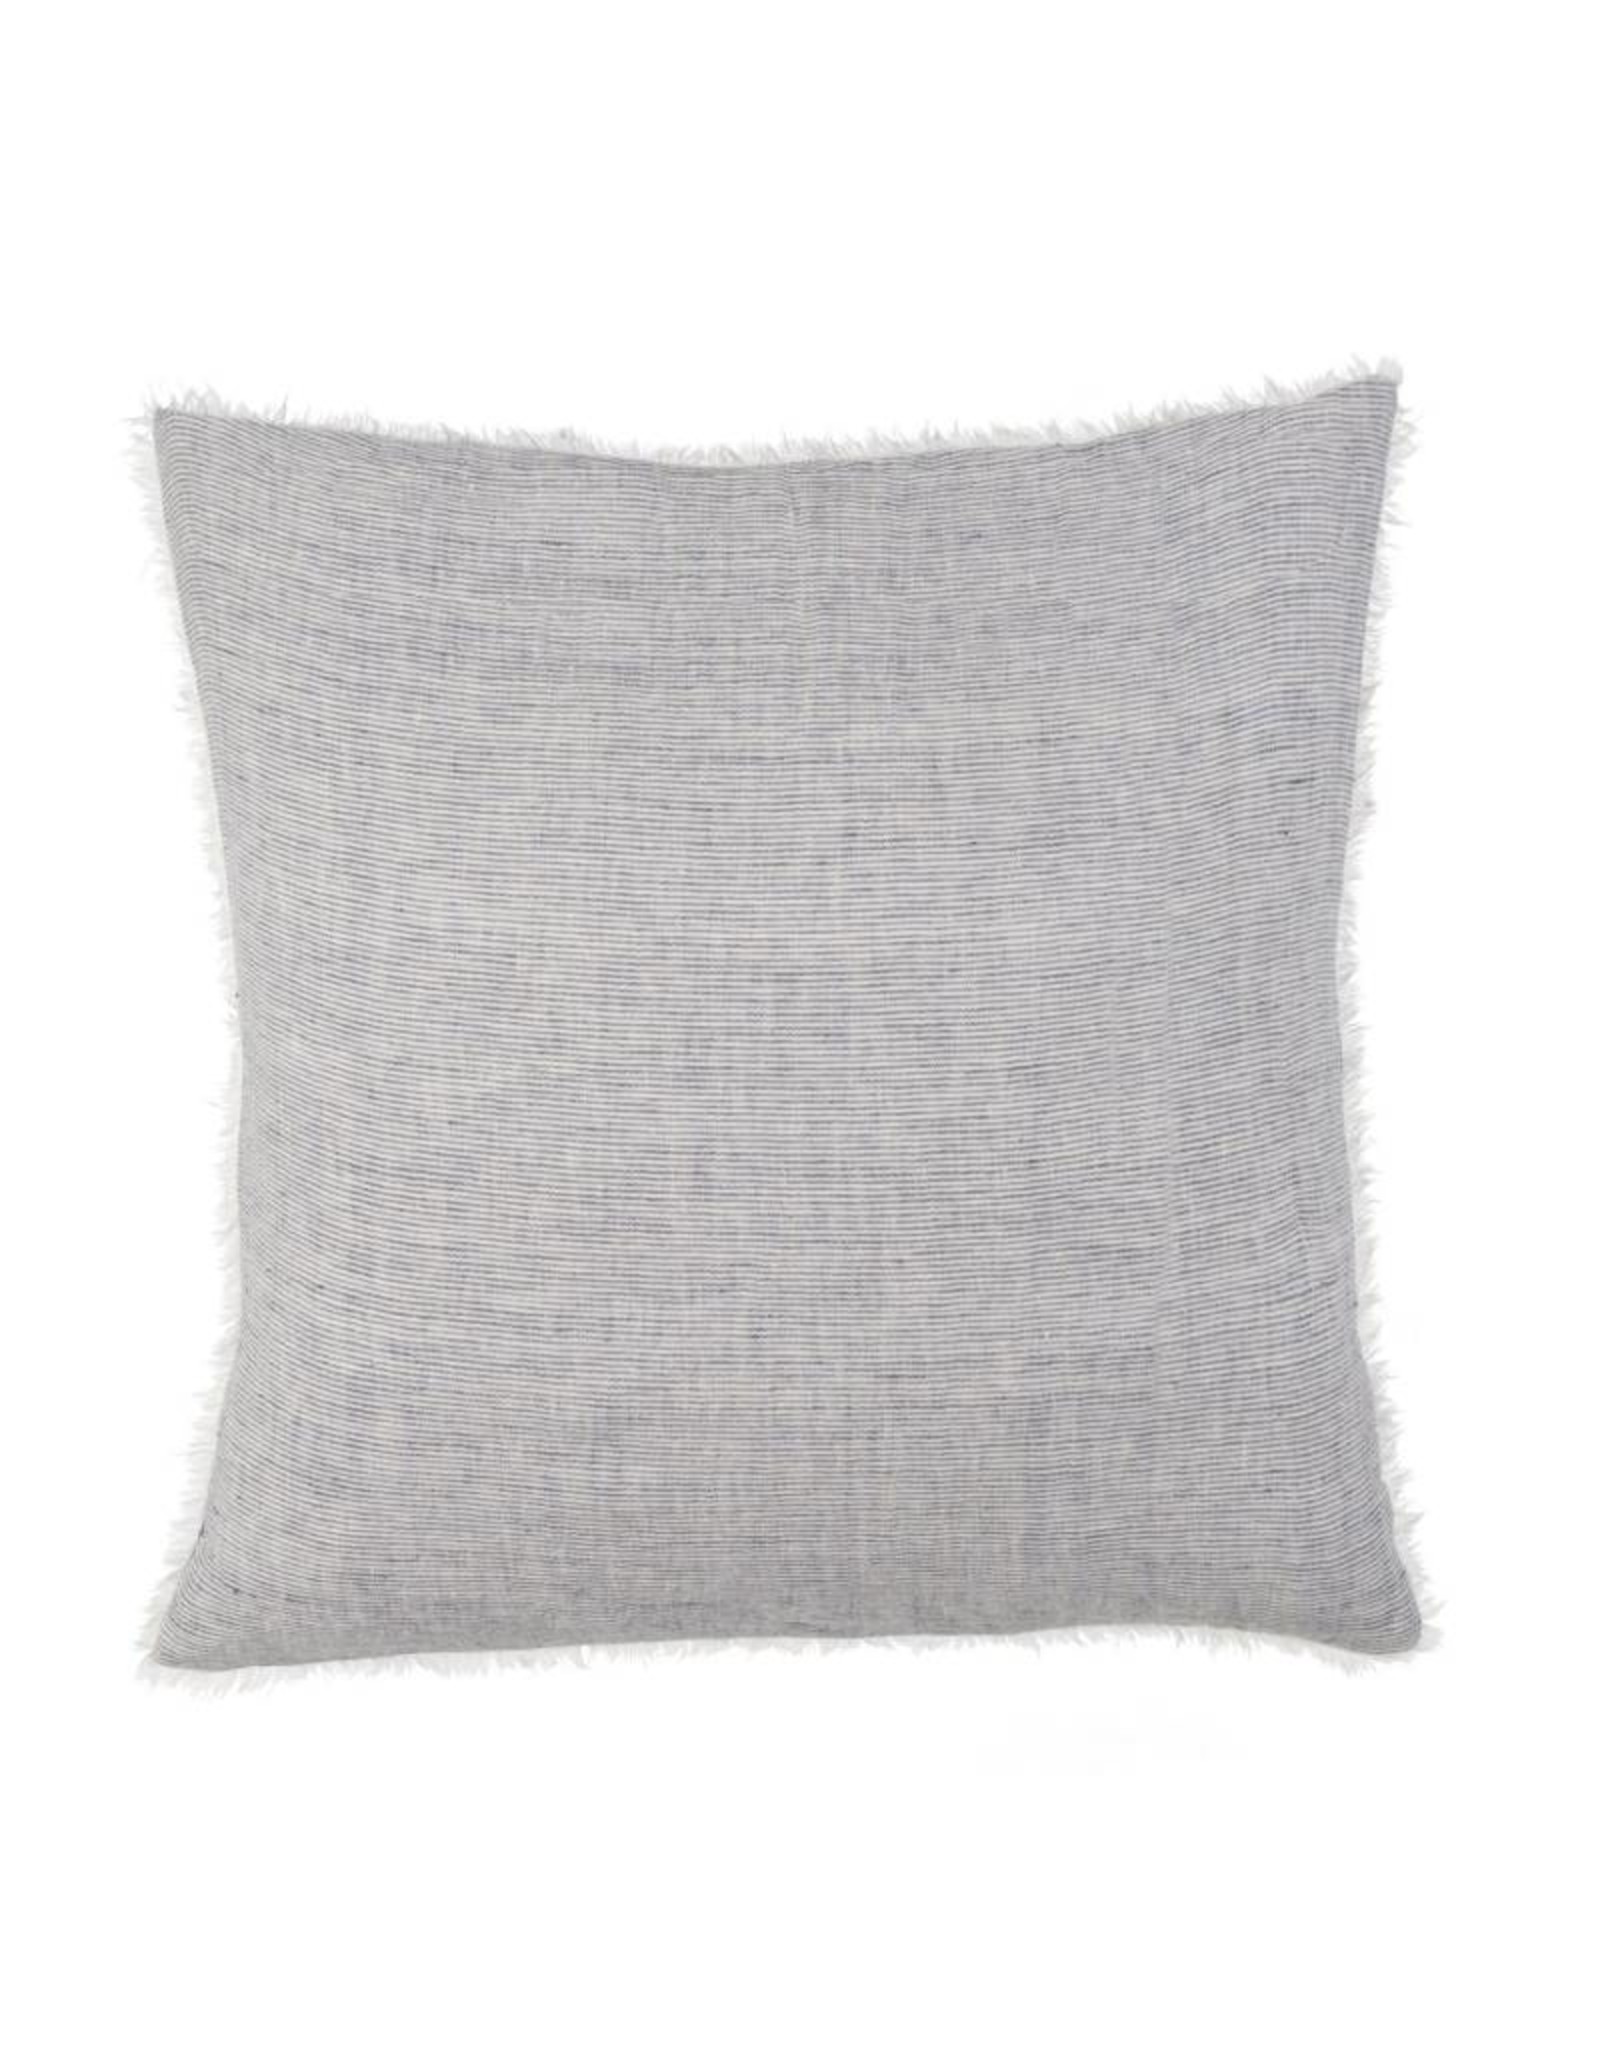 Indaba Lina Linen Pillow - Stripe - 24" x 24"